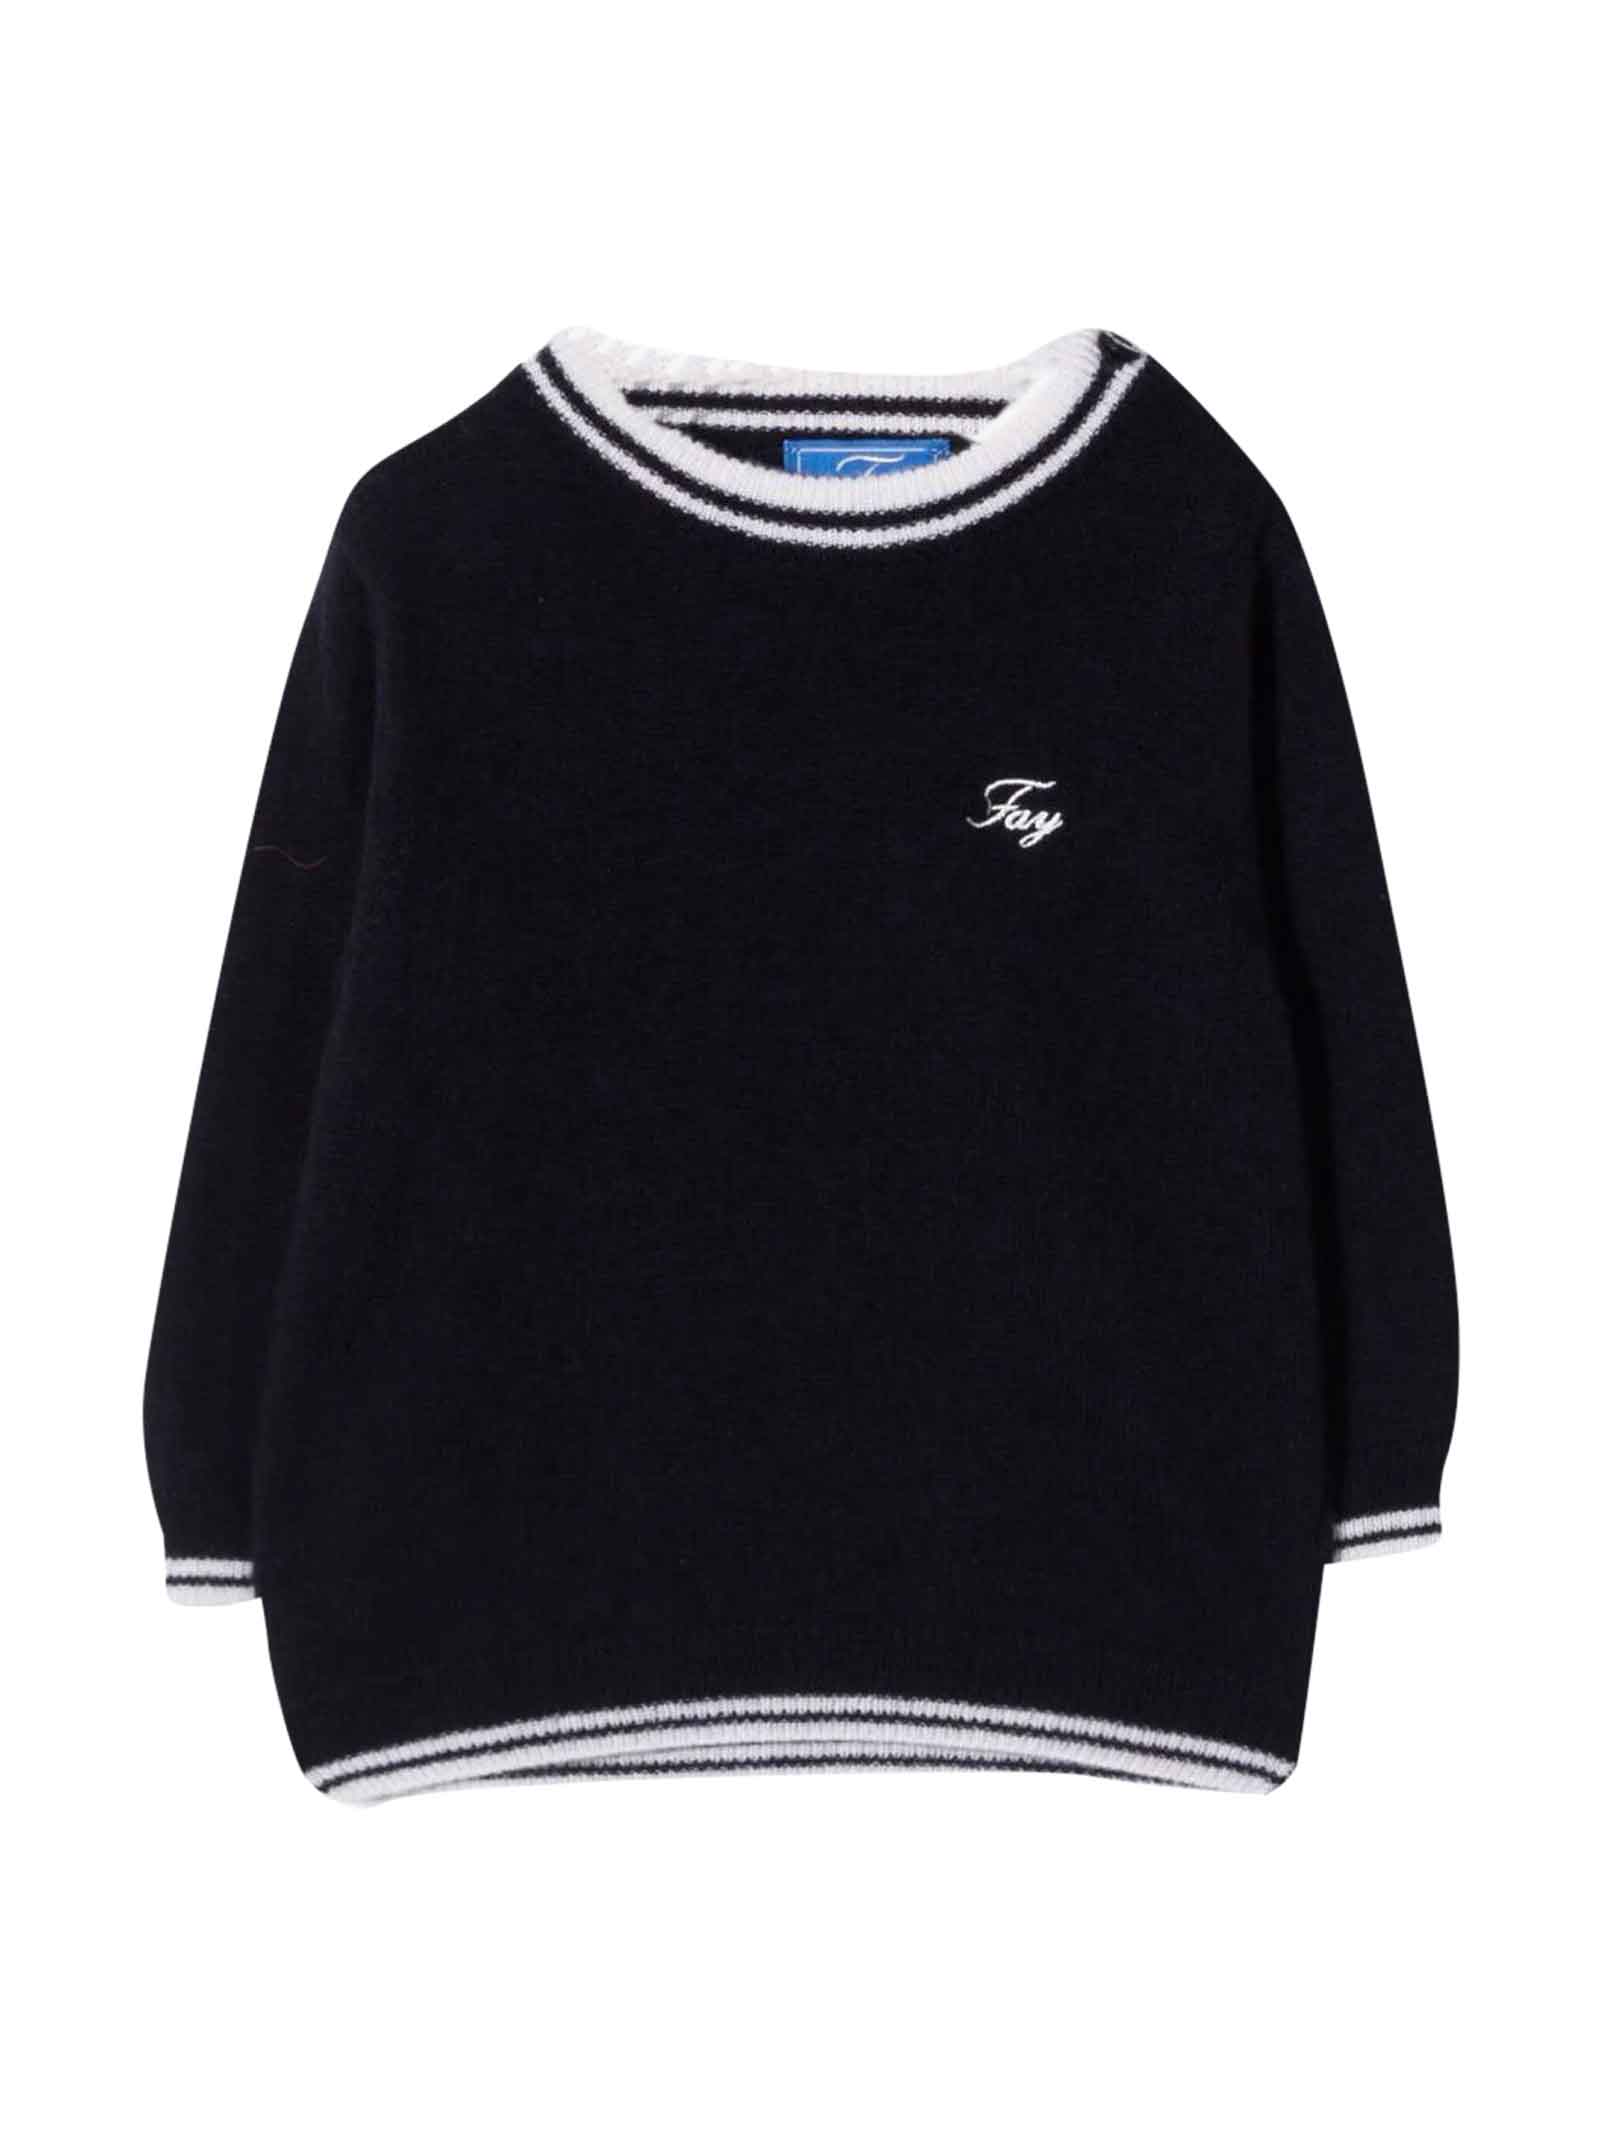 Fay Blue Sweater Unisex